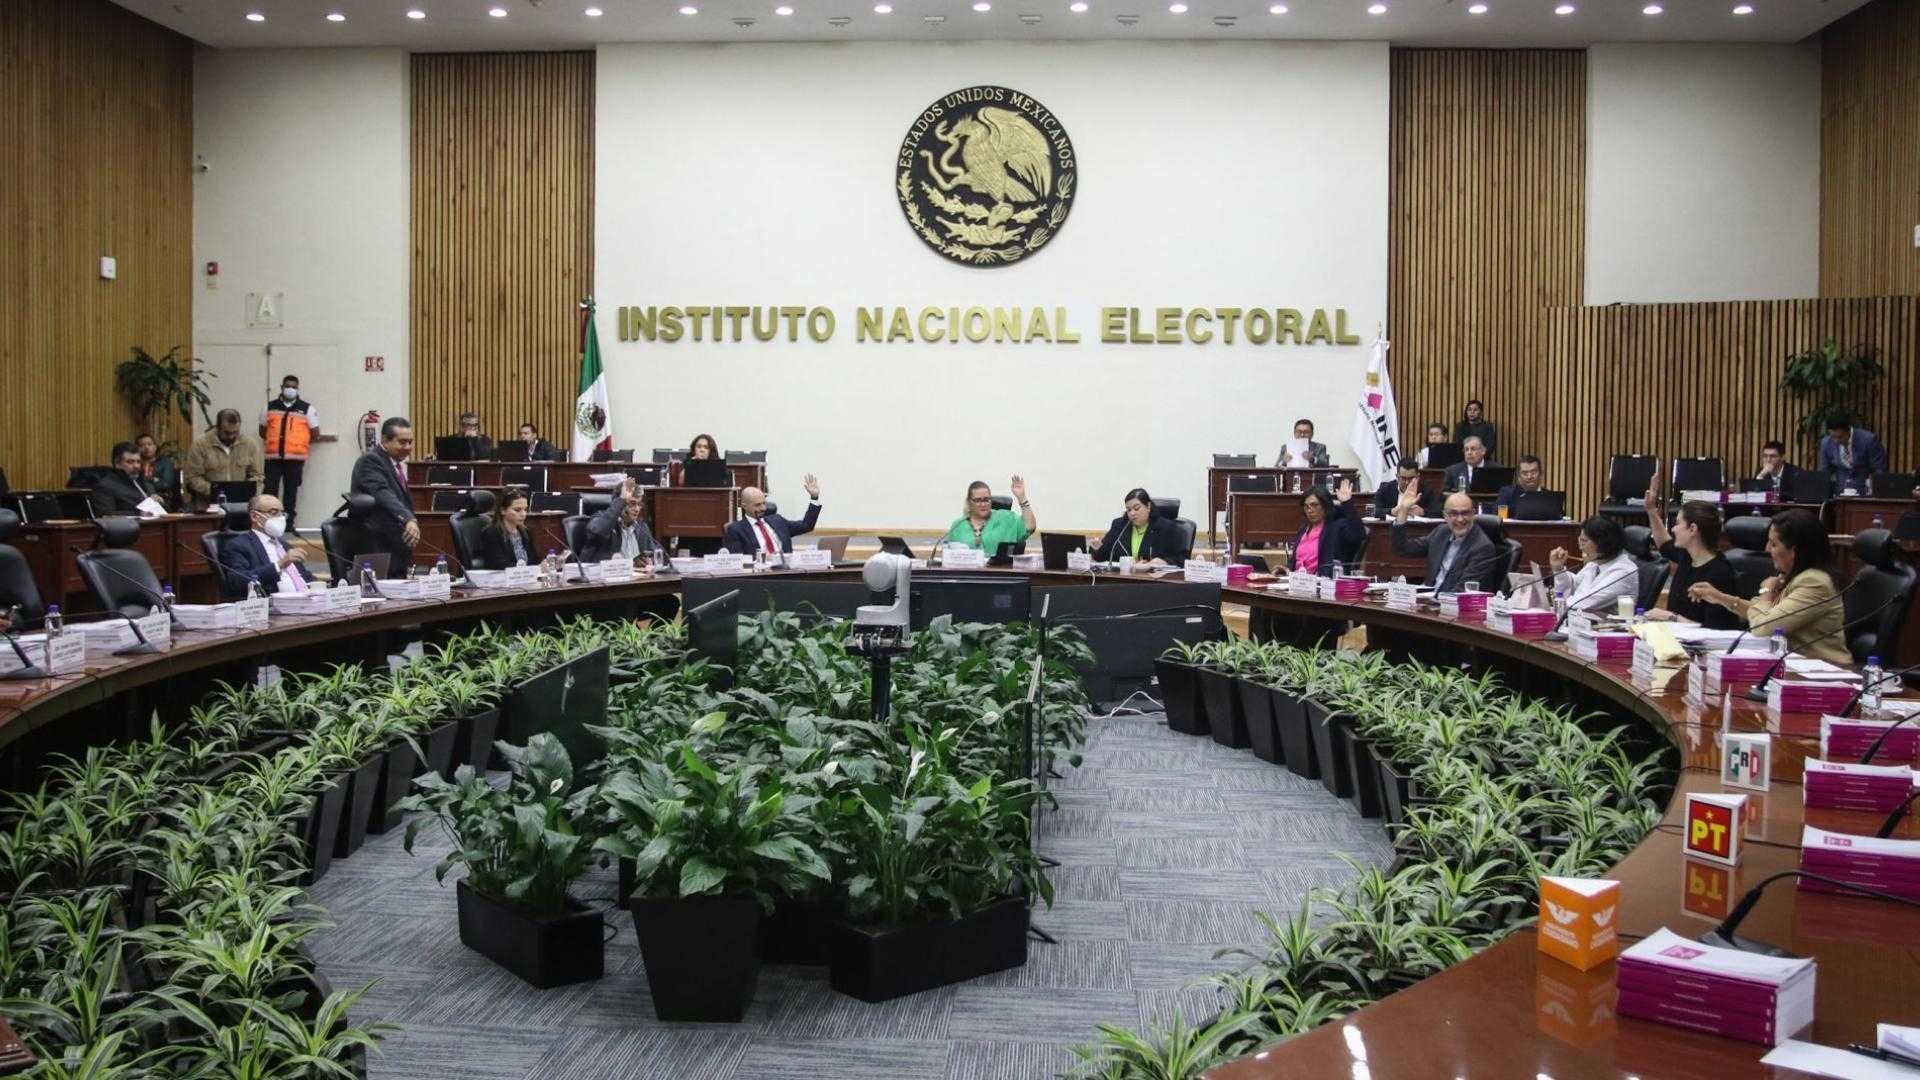 INE Detecta Irregularidades en Gastos de Campaña... pero Reduce Multas a Partidos